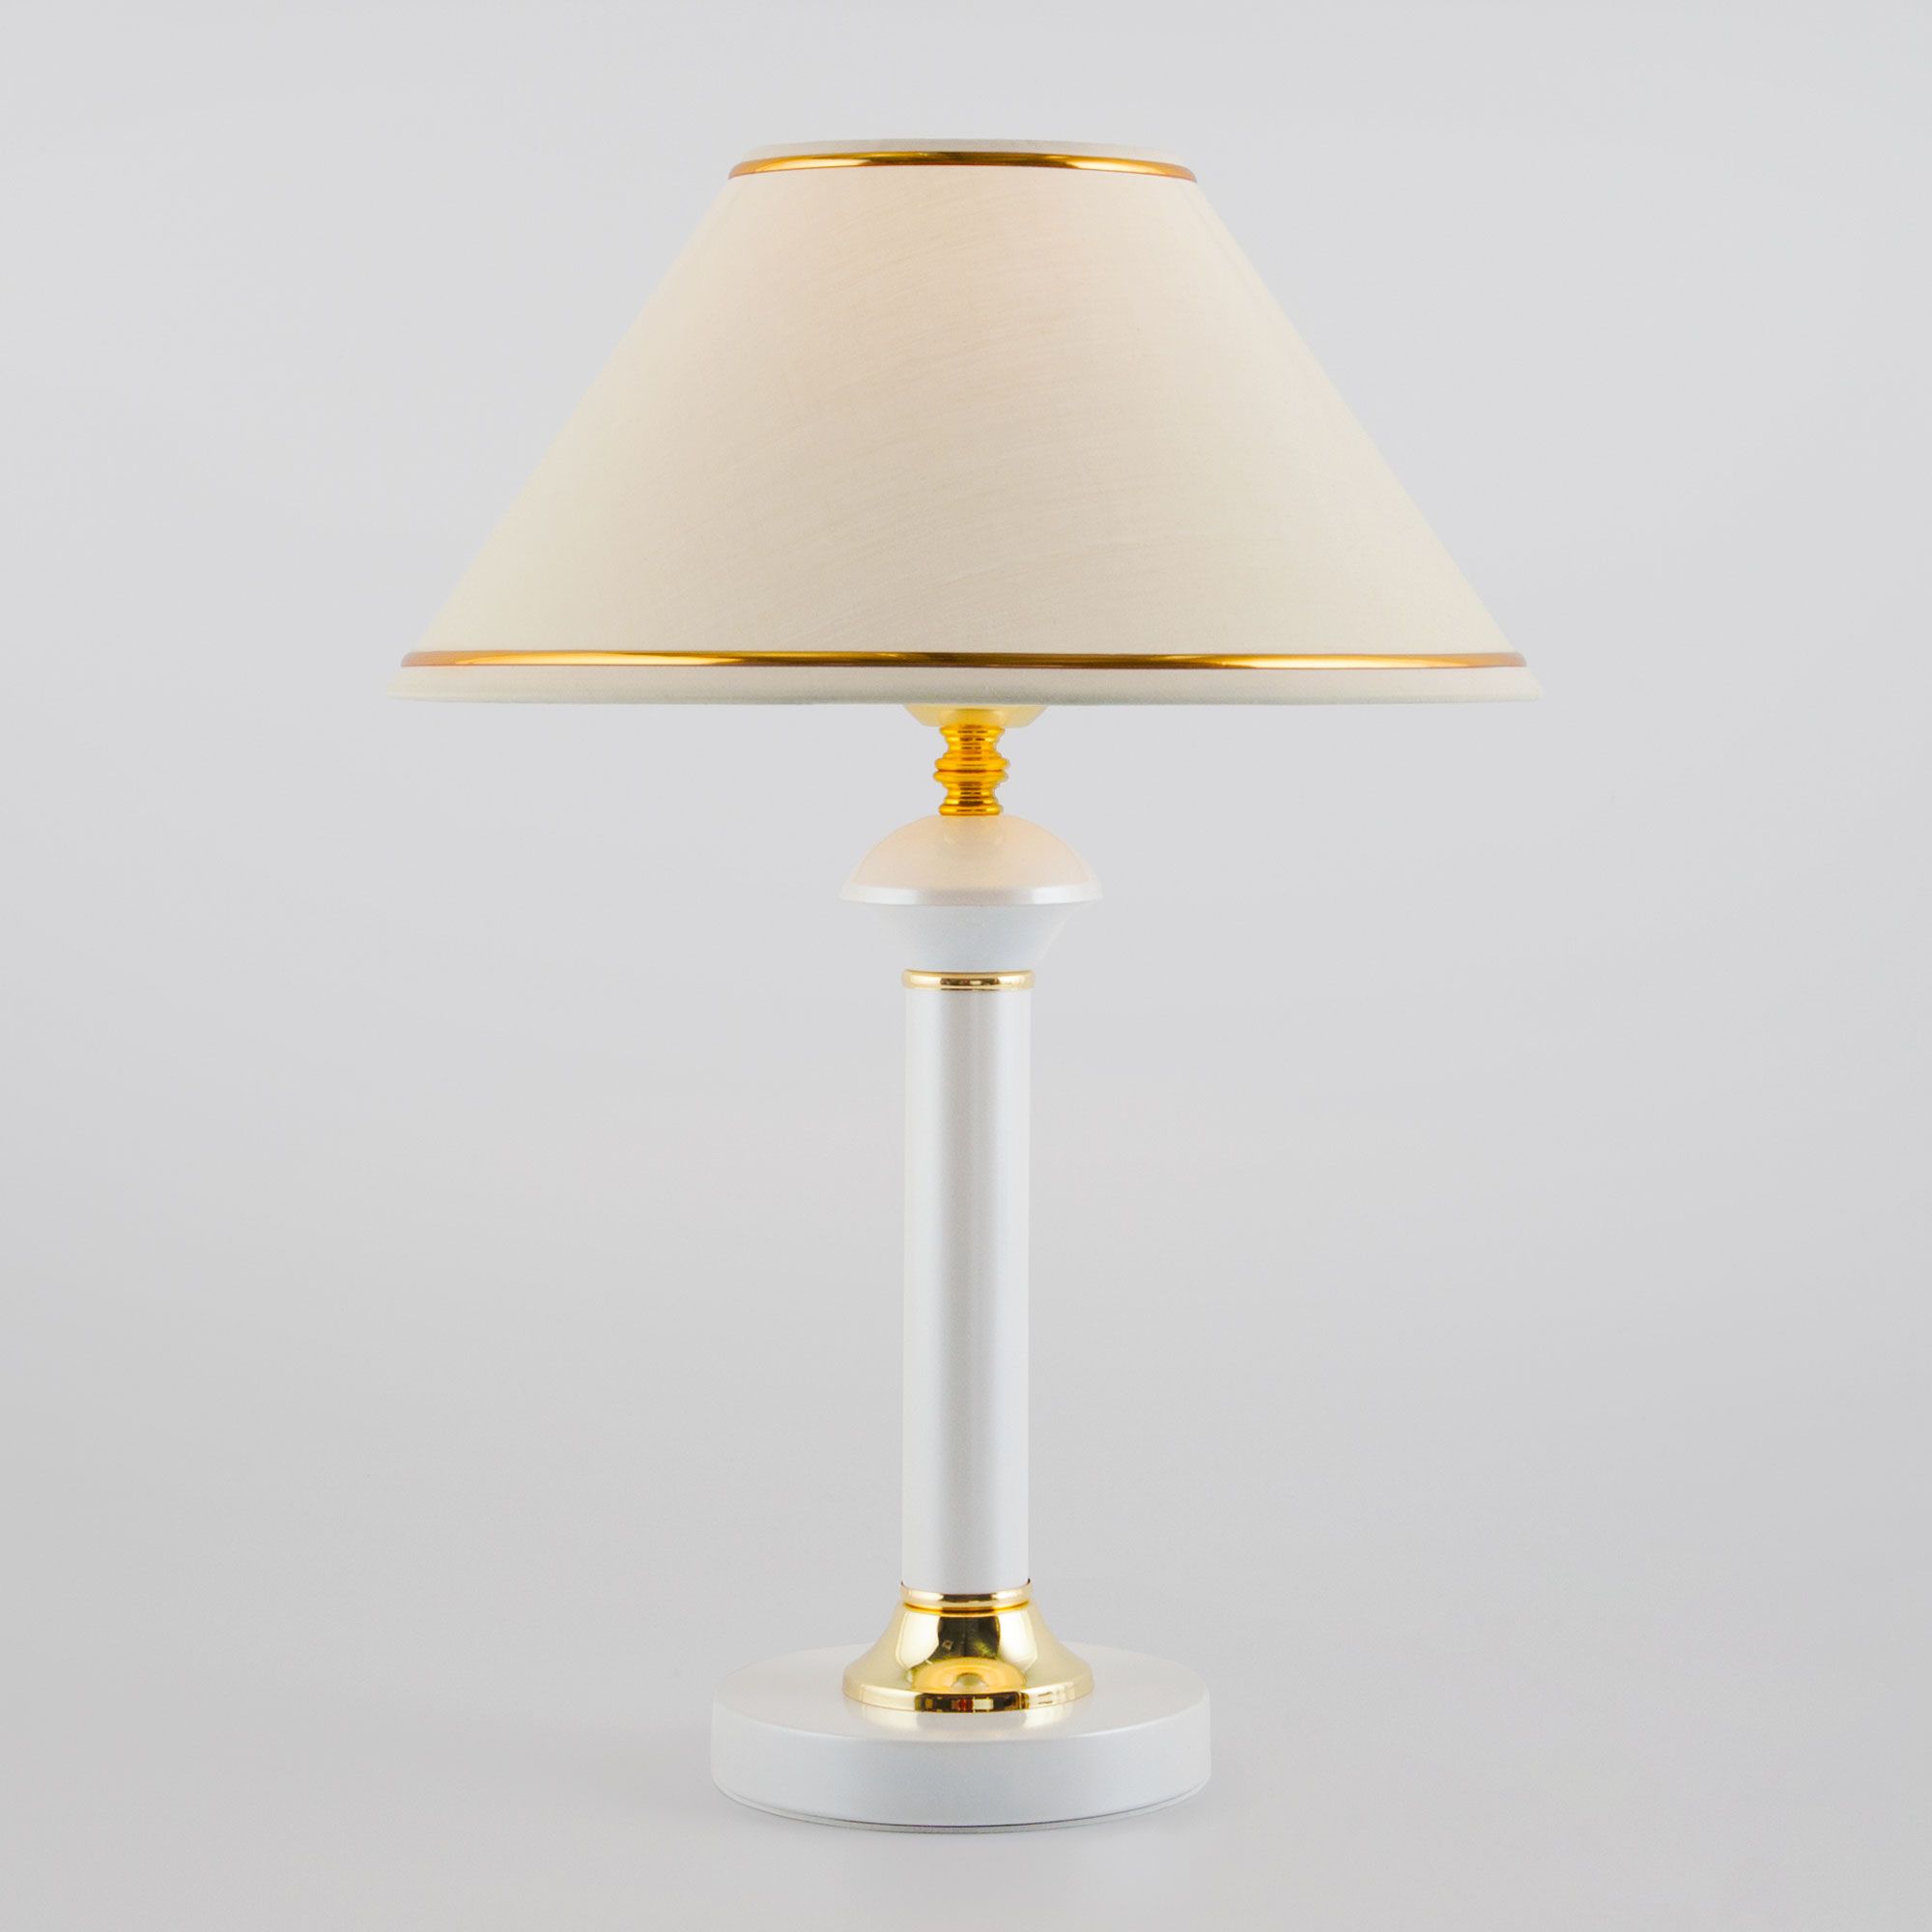 Настольный светильник с тканевым абажуром Eurosvet Lorenzo 60019/1 глянцевый белый. Фото 1